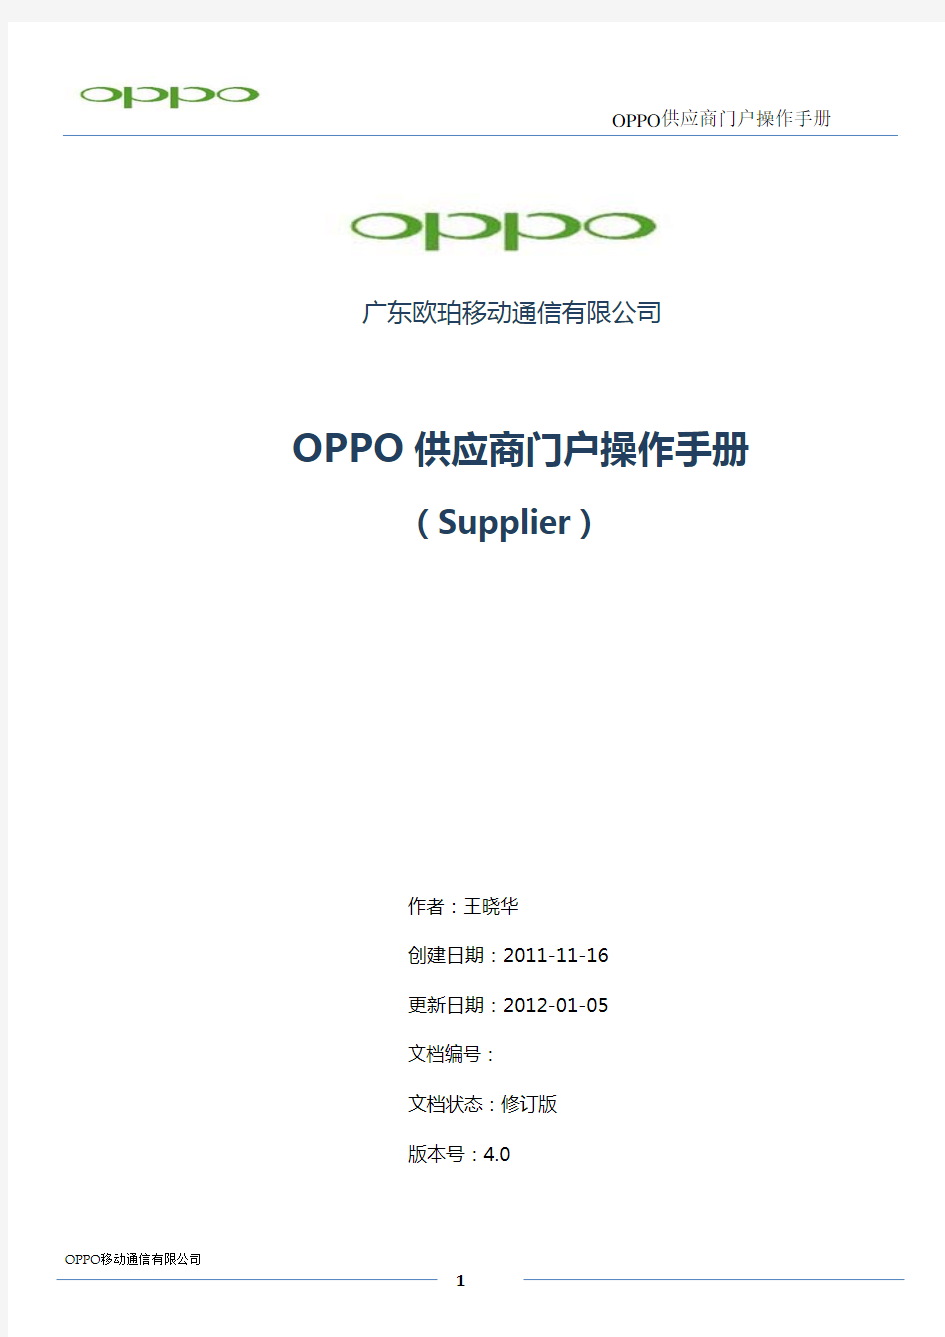 OPPO供应商门户操作手册V4.0